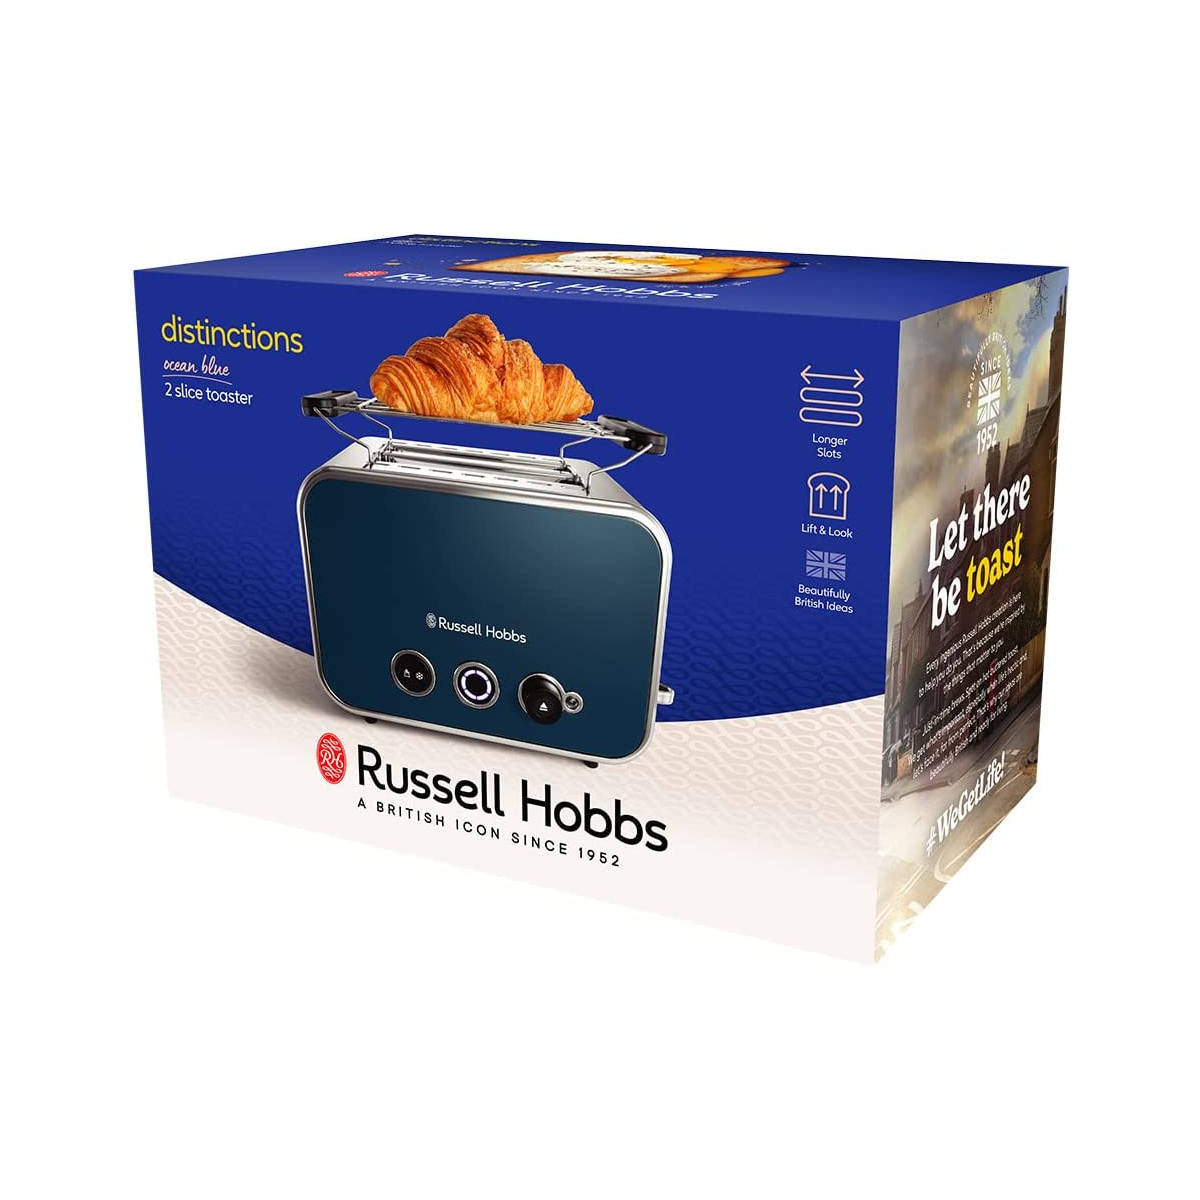 RUSSELL HOBBS Distinctions 26431-56 (1600 Blue Toaster Ocean Schlitze: Edelstahl 2) Ocean Watt, Blue